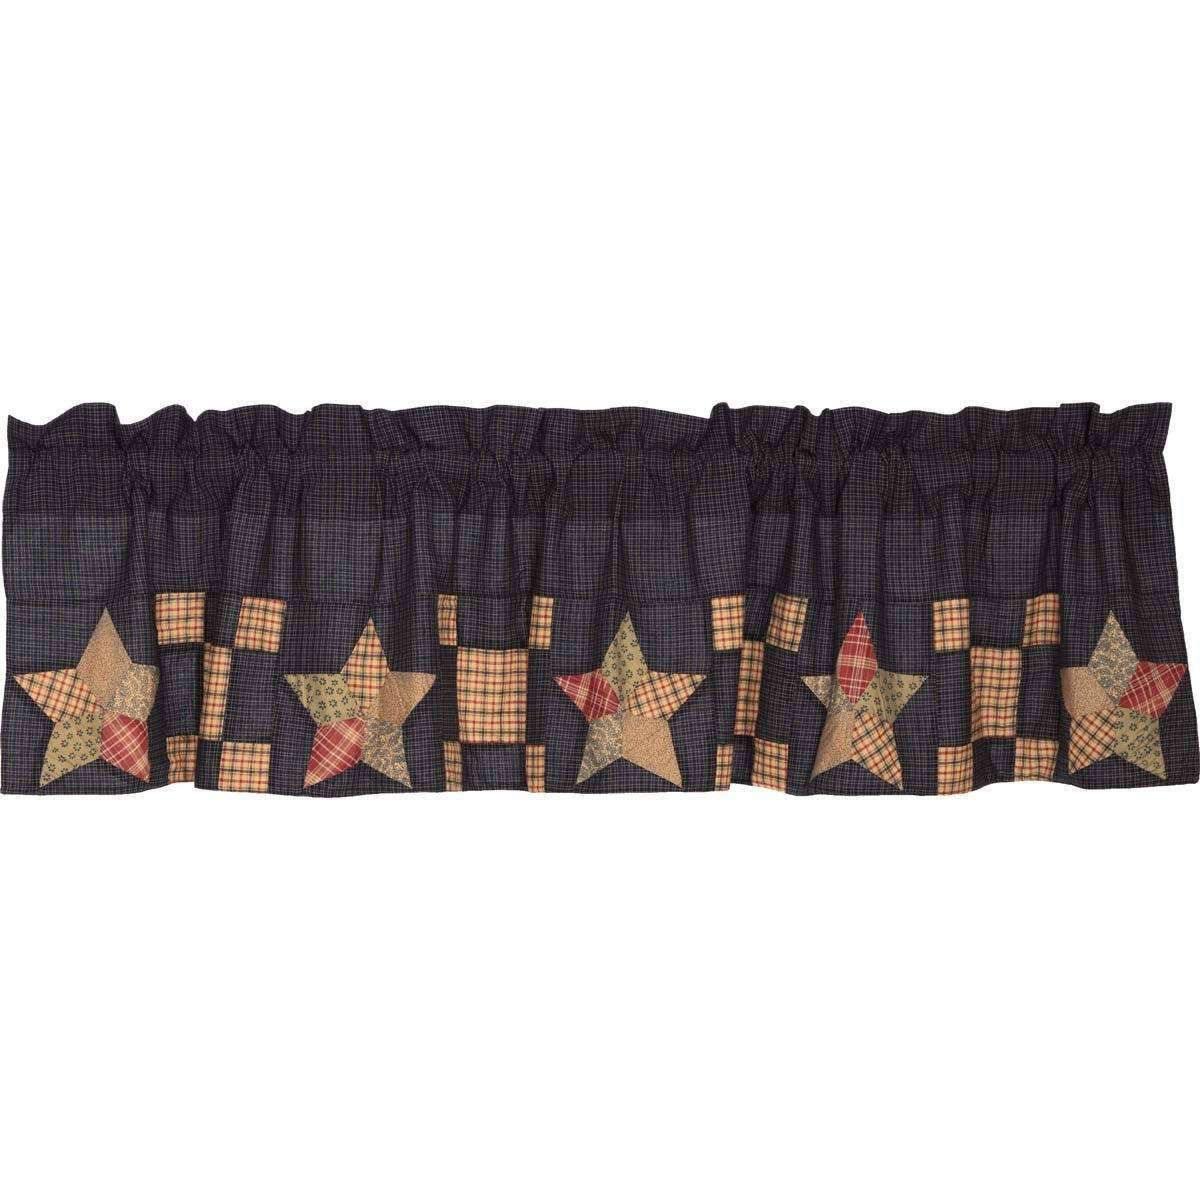 Arlington Valance Curtain Block Border Navy VHC Brands - The Fox Decor